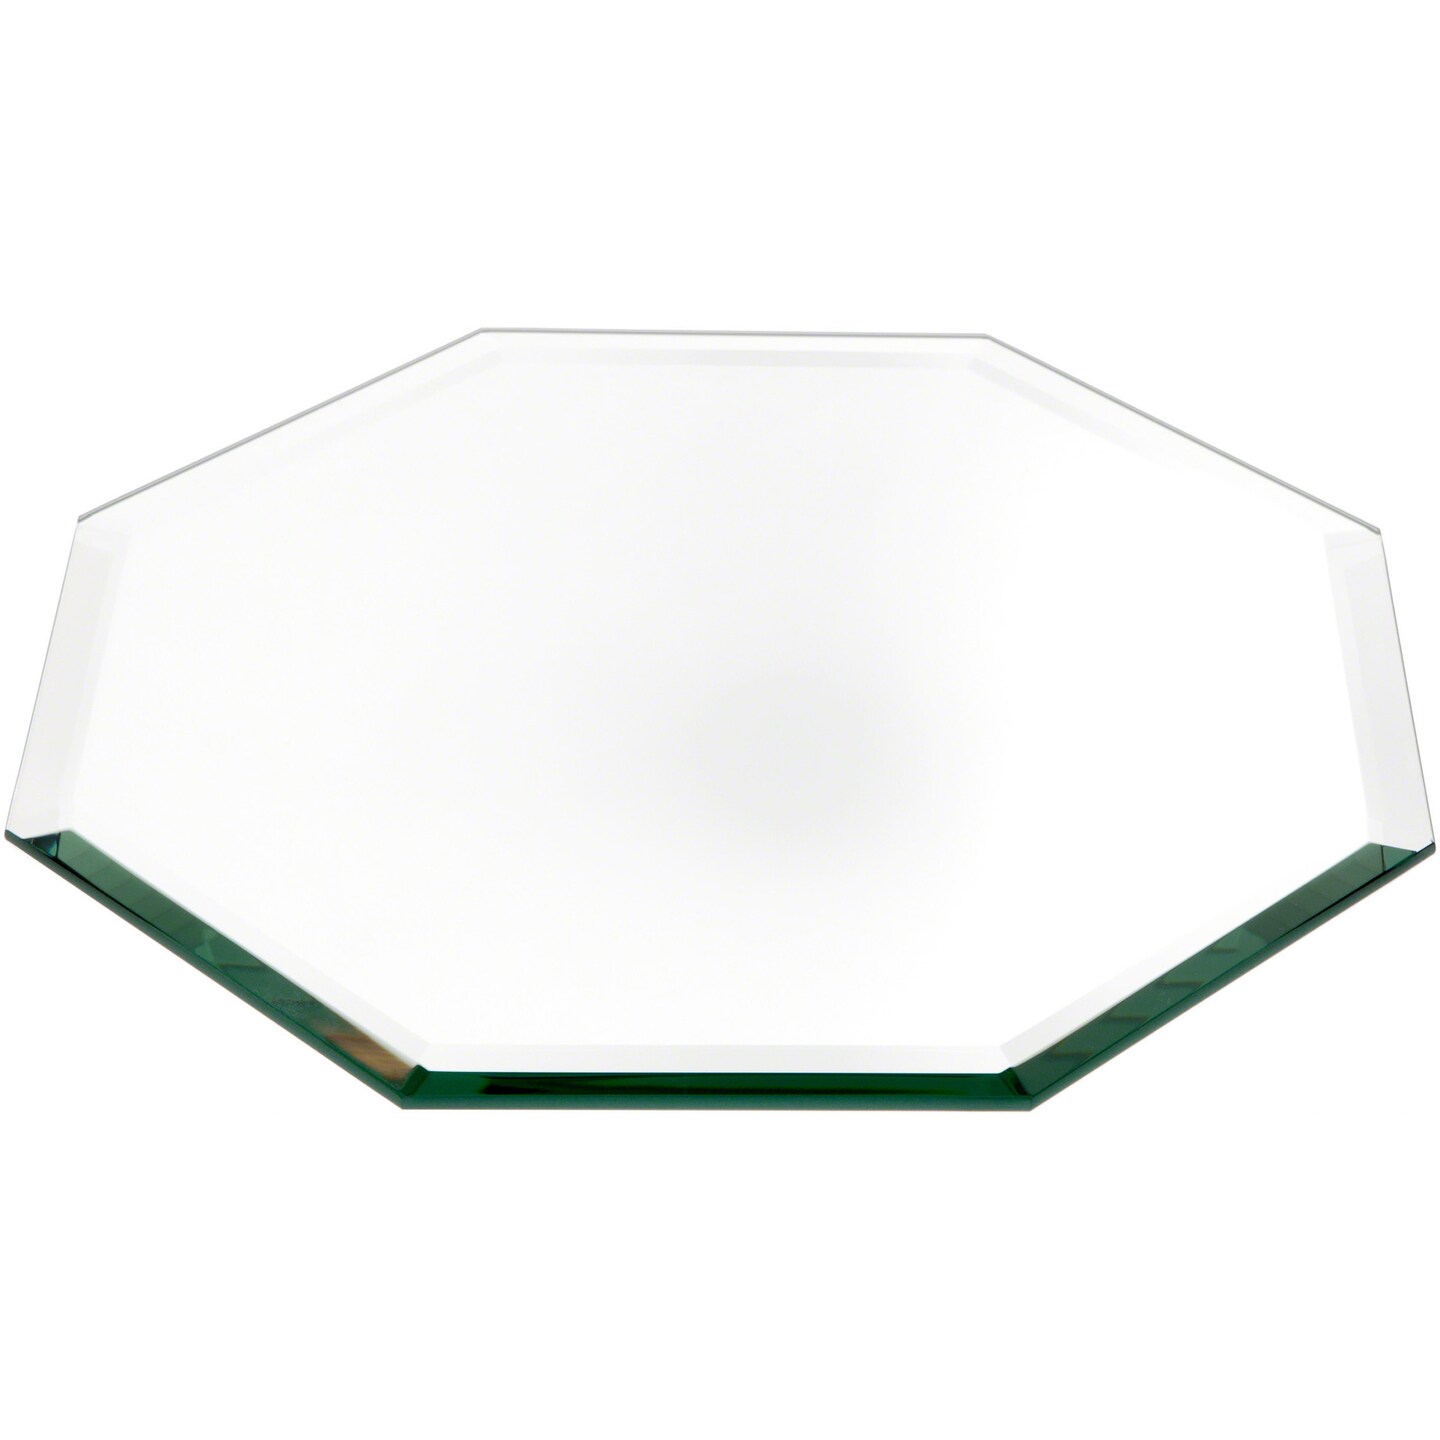 Plymor Octagon 5mm Beveled Glass Mirror, 10 inch x 10 inch